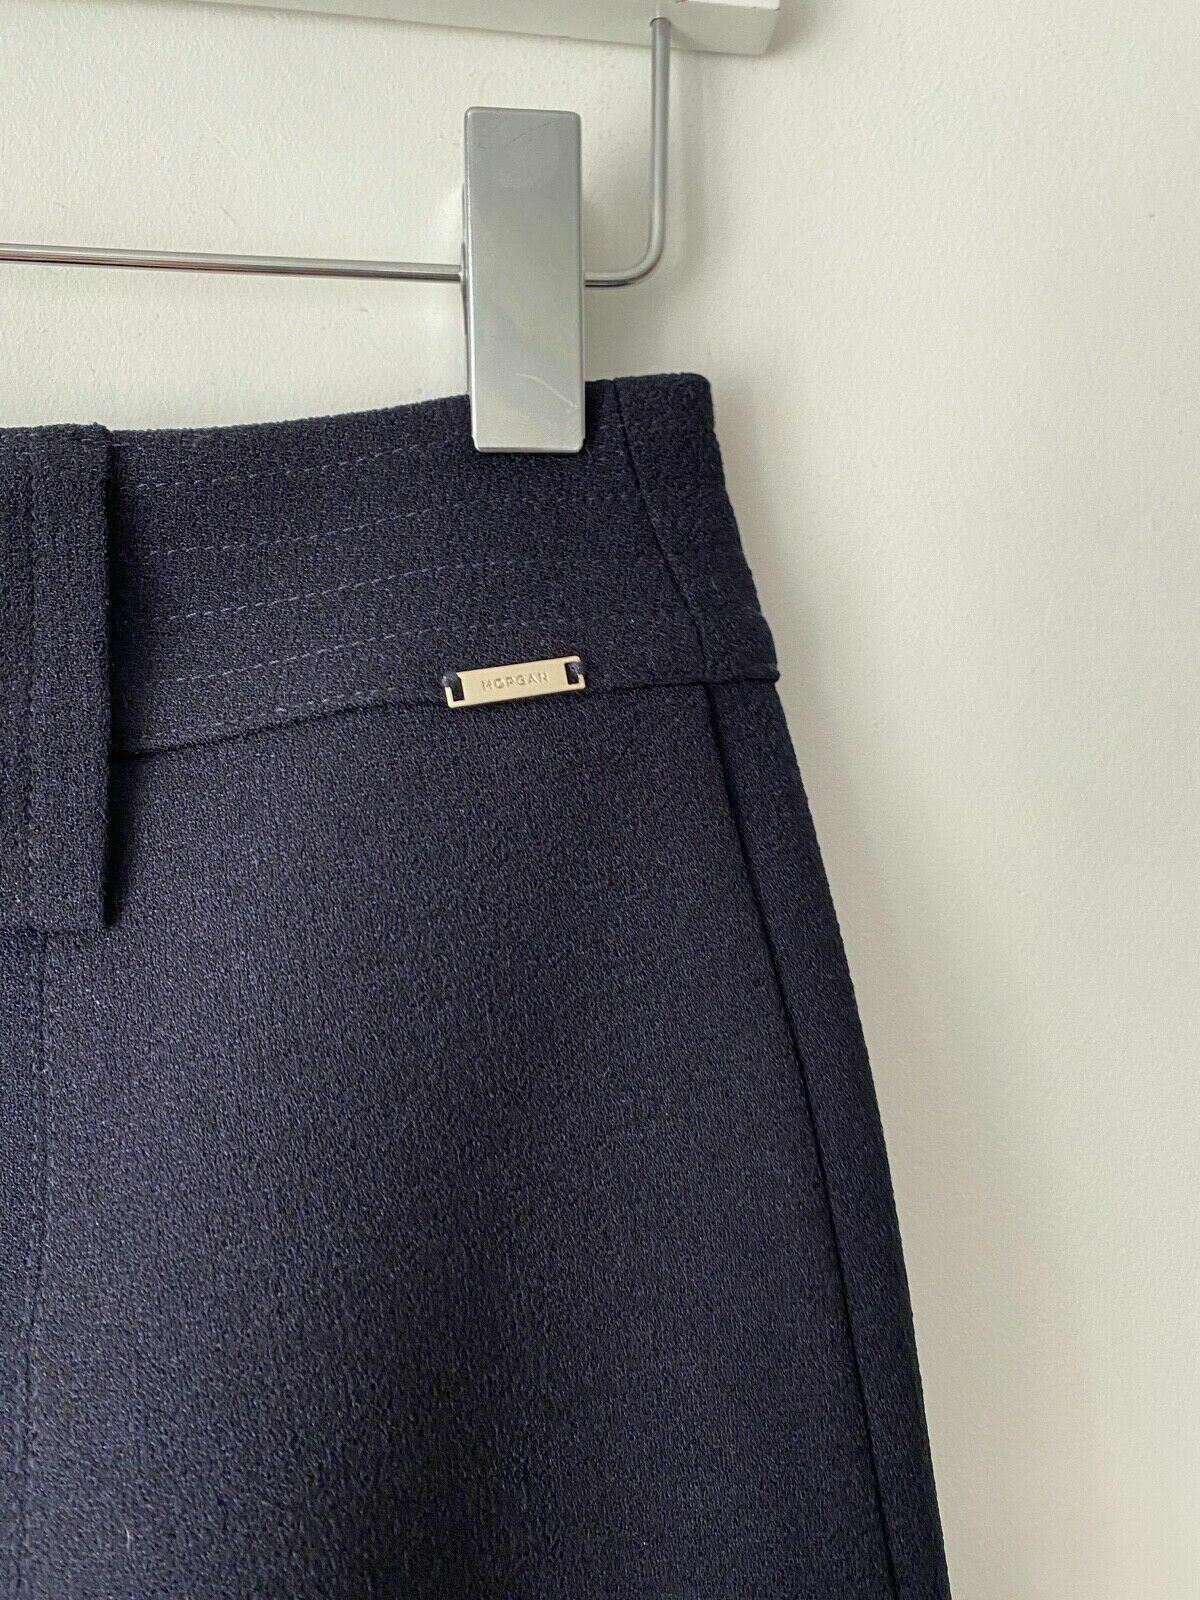 Morgan Dark Blue Mini Button Down Skirt Size 6 UK RRP £52 Front Pockets